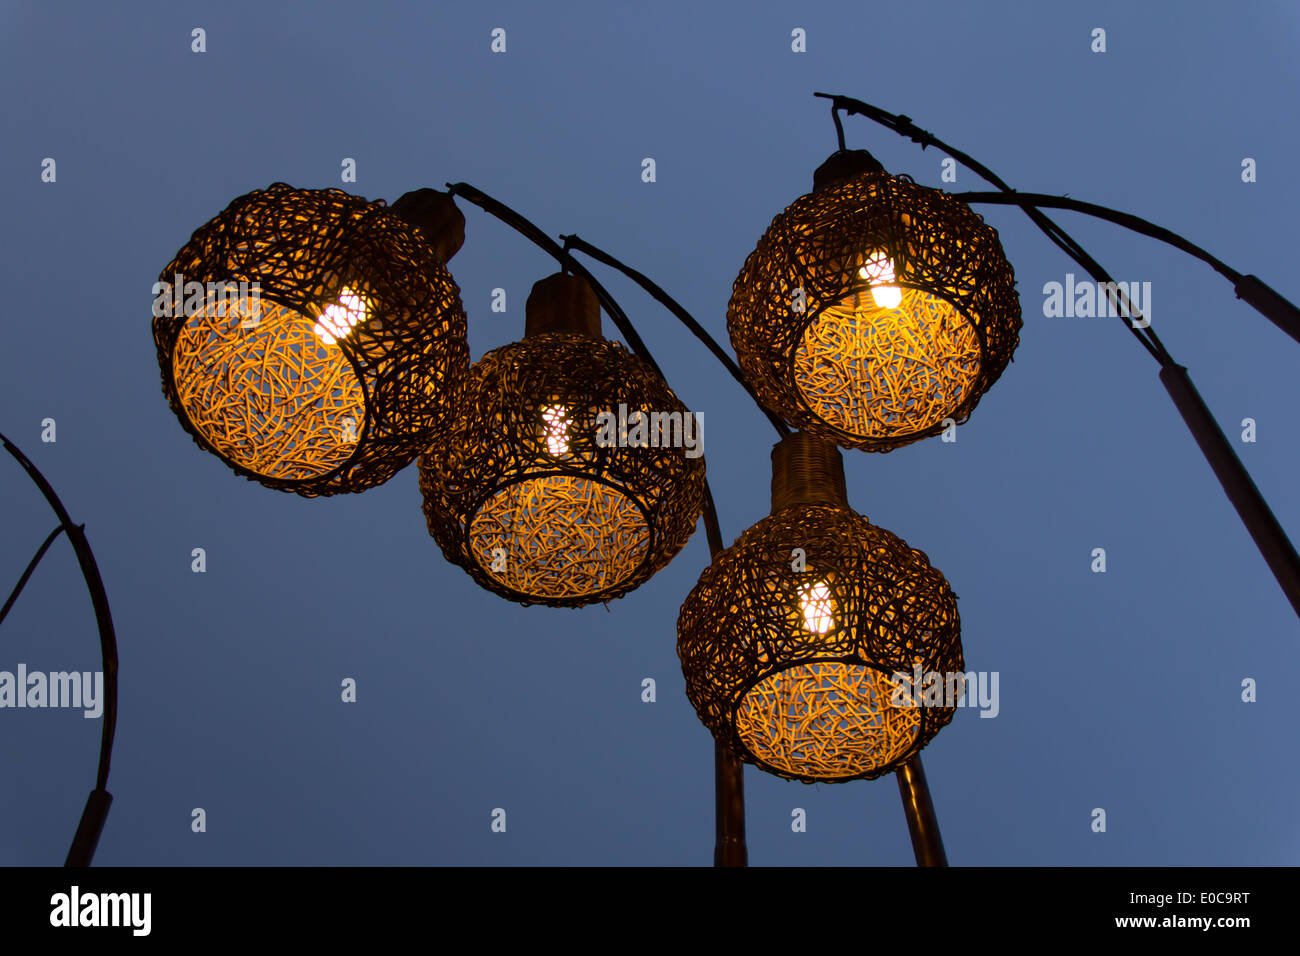 Rattan lamp in the sky Stock Photo